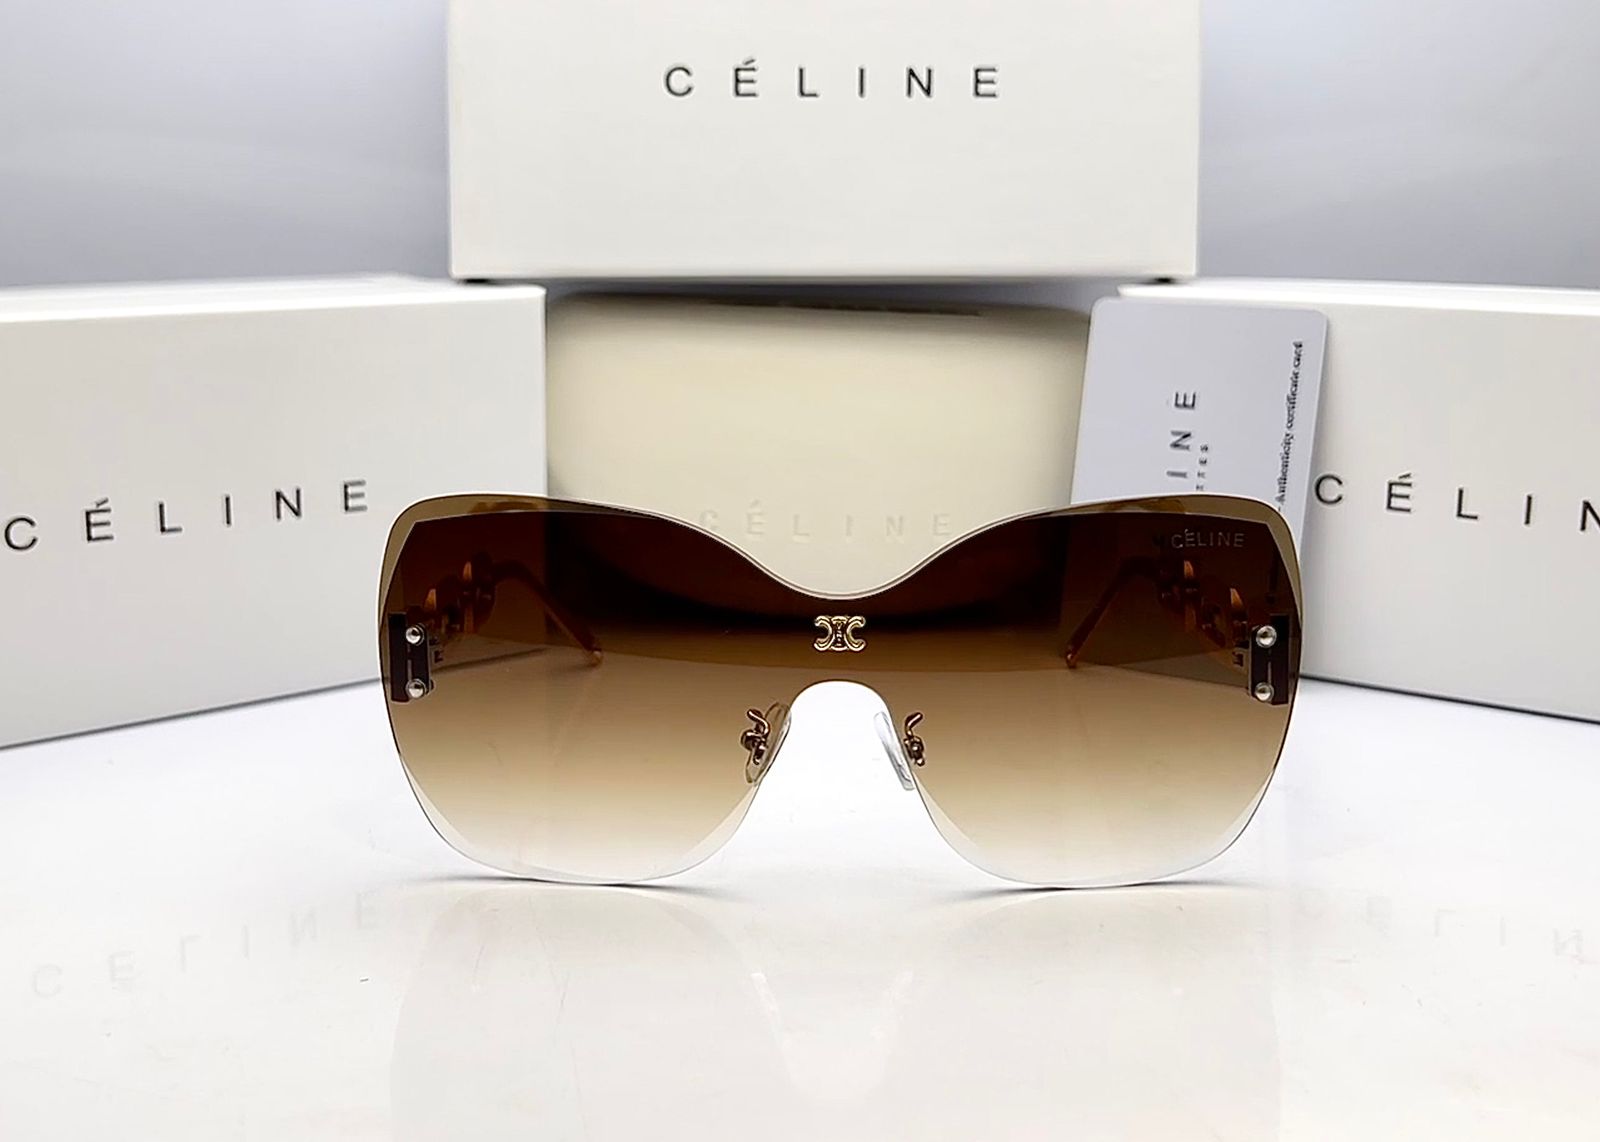 Celine Sunglasses Price in Pakistan